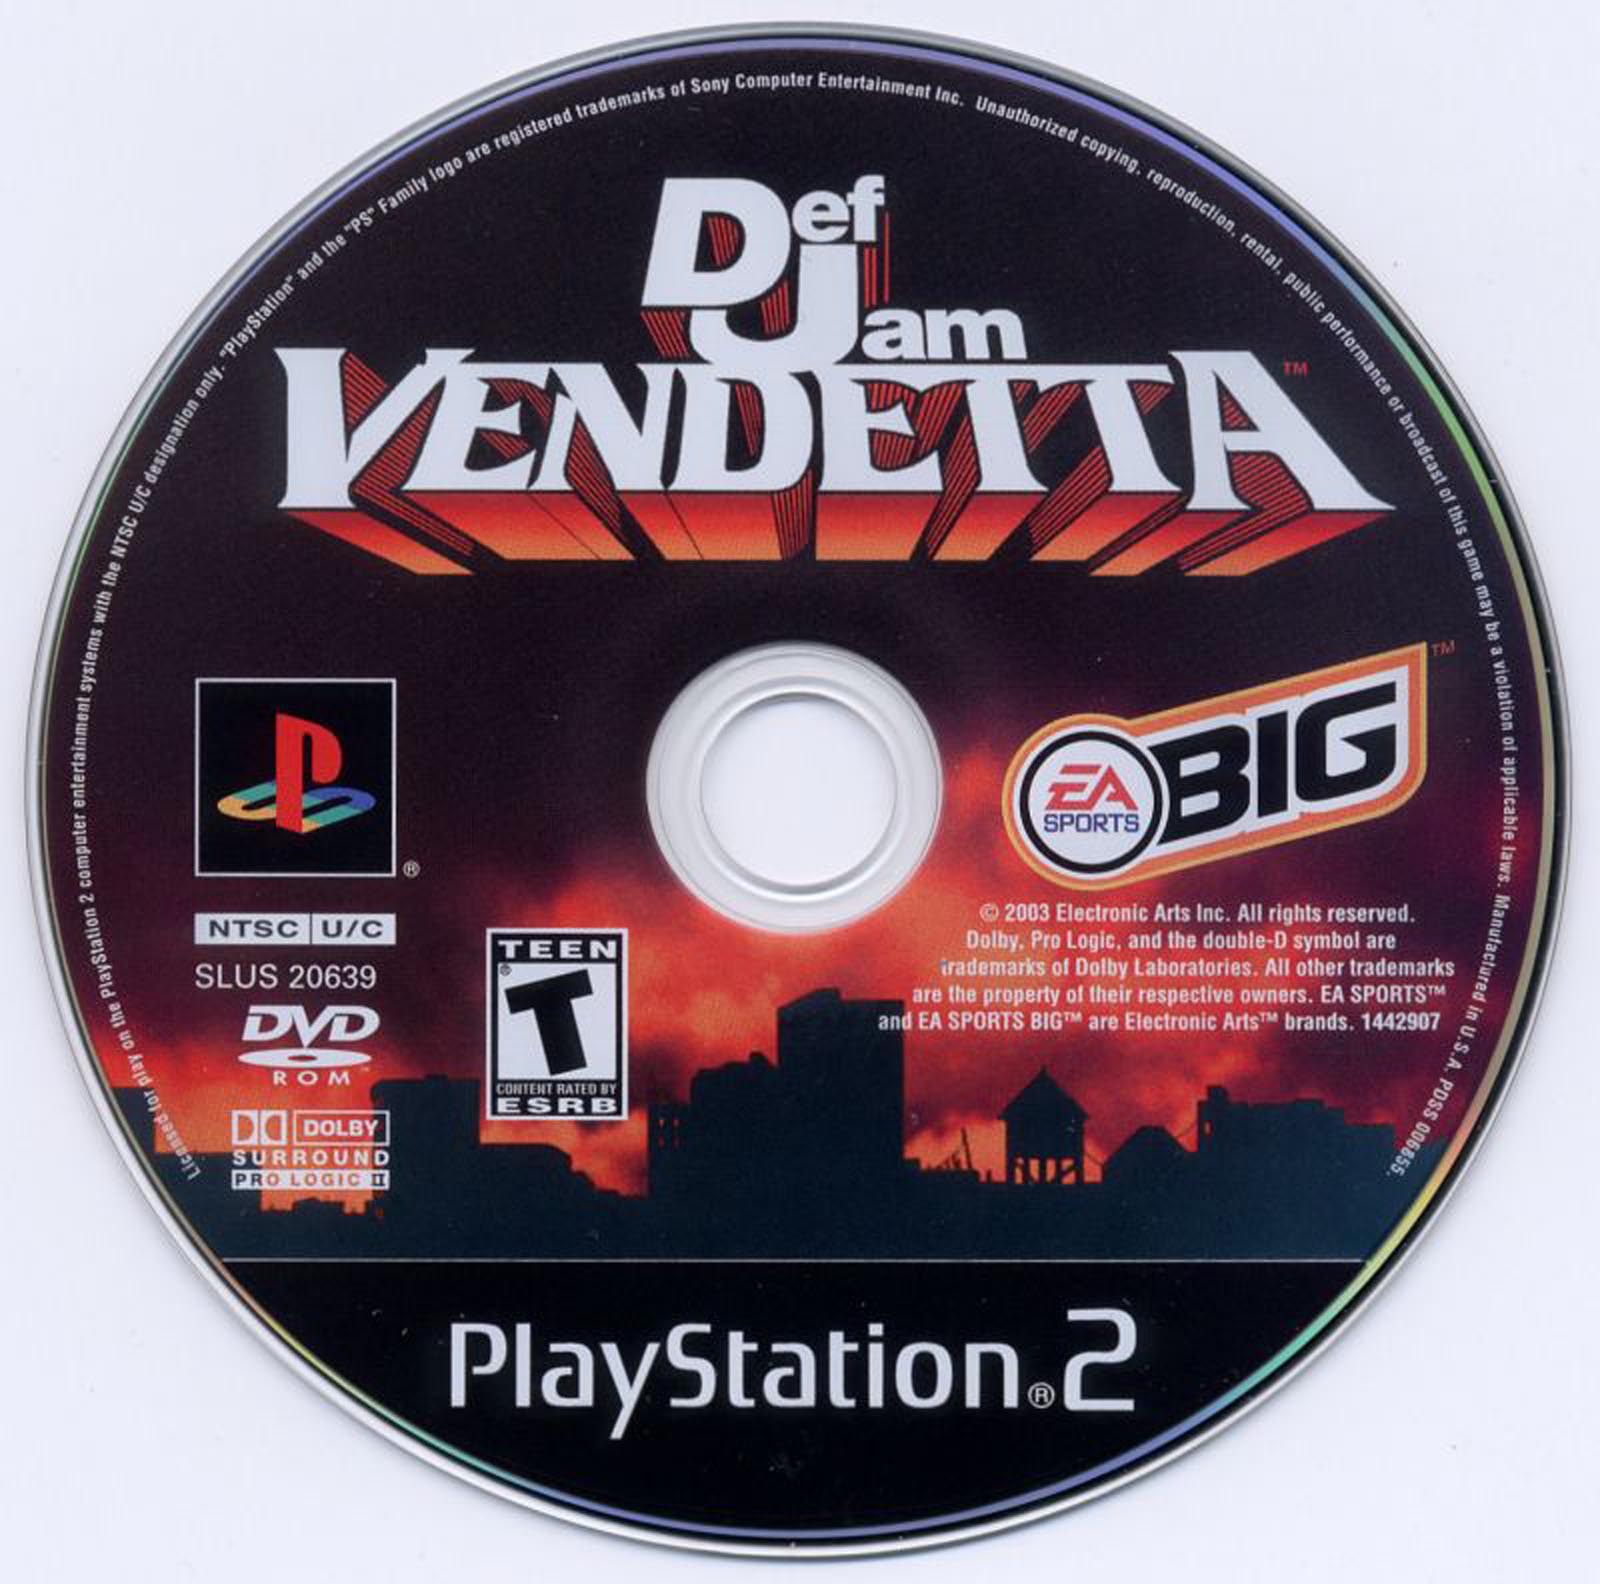 DEF JAM VENDETTA - Playstation 2 (PS2) iso download